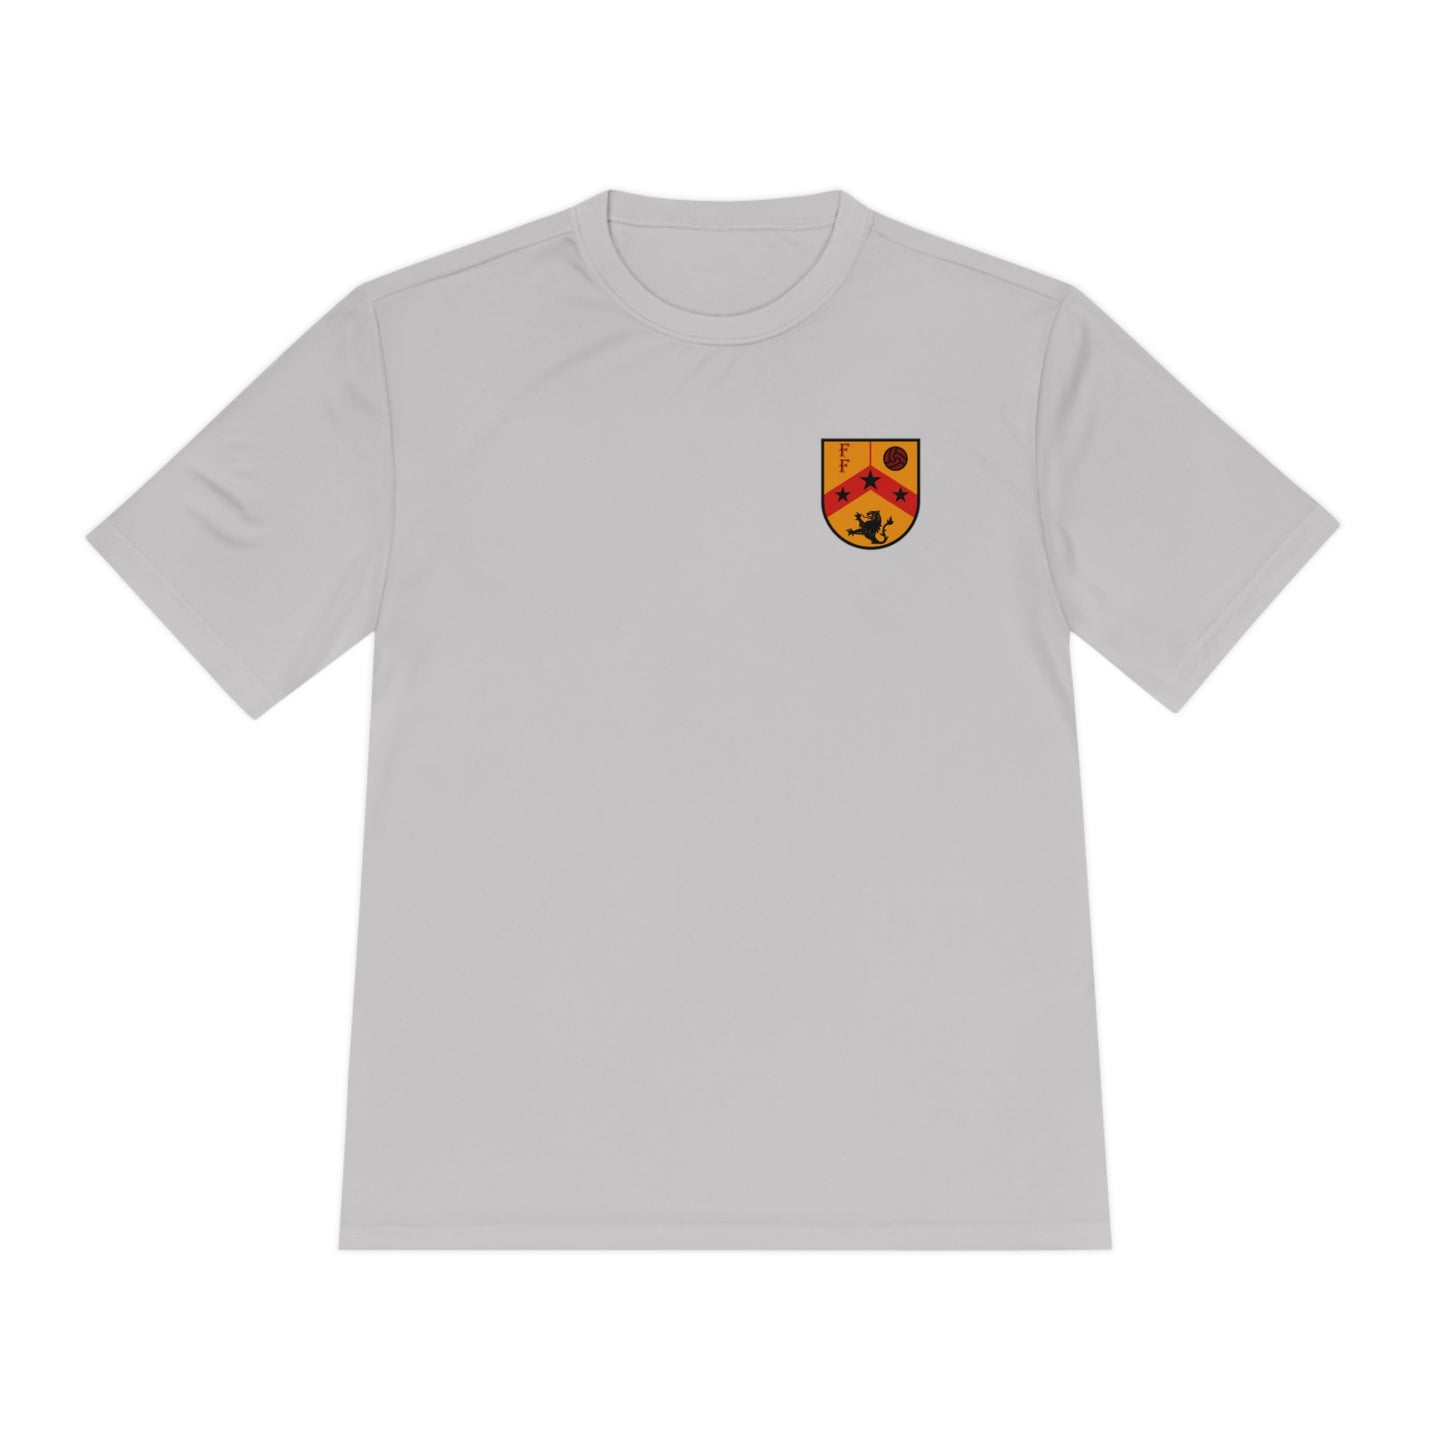 FIERCE FEARLESS & FOCUSED Athletic T-Shirt (Unisex)